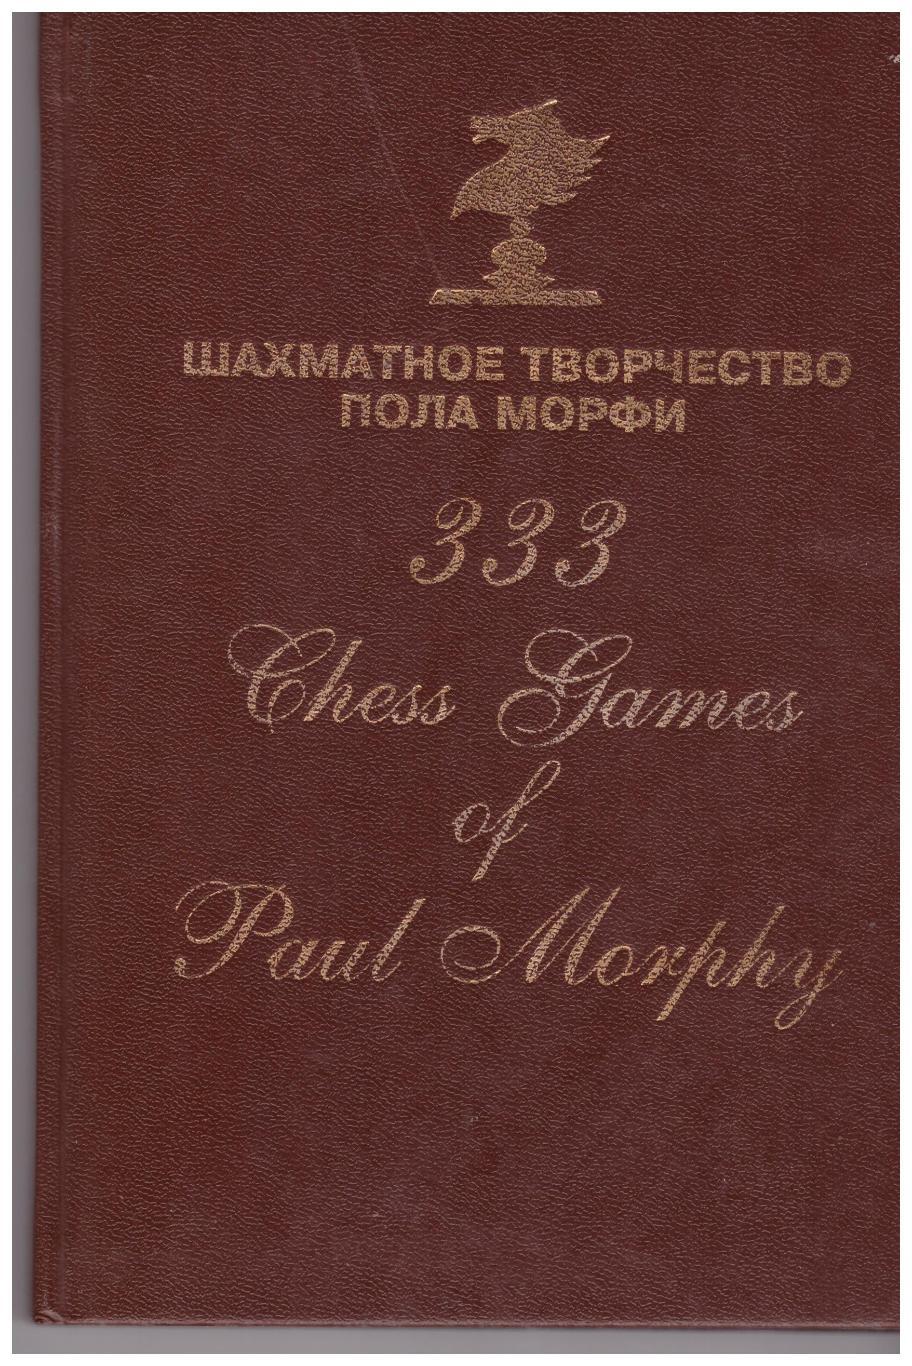 Шахматное творчество Пола Морфи. 333 партии (Казань, 1996)